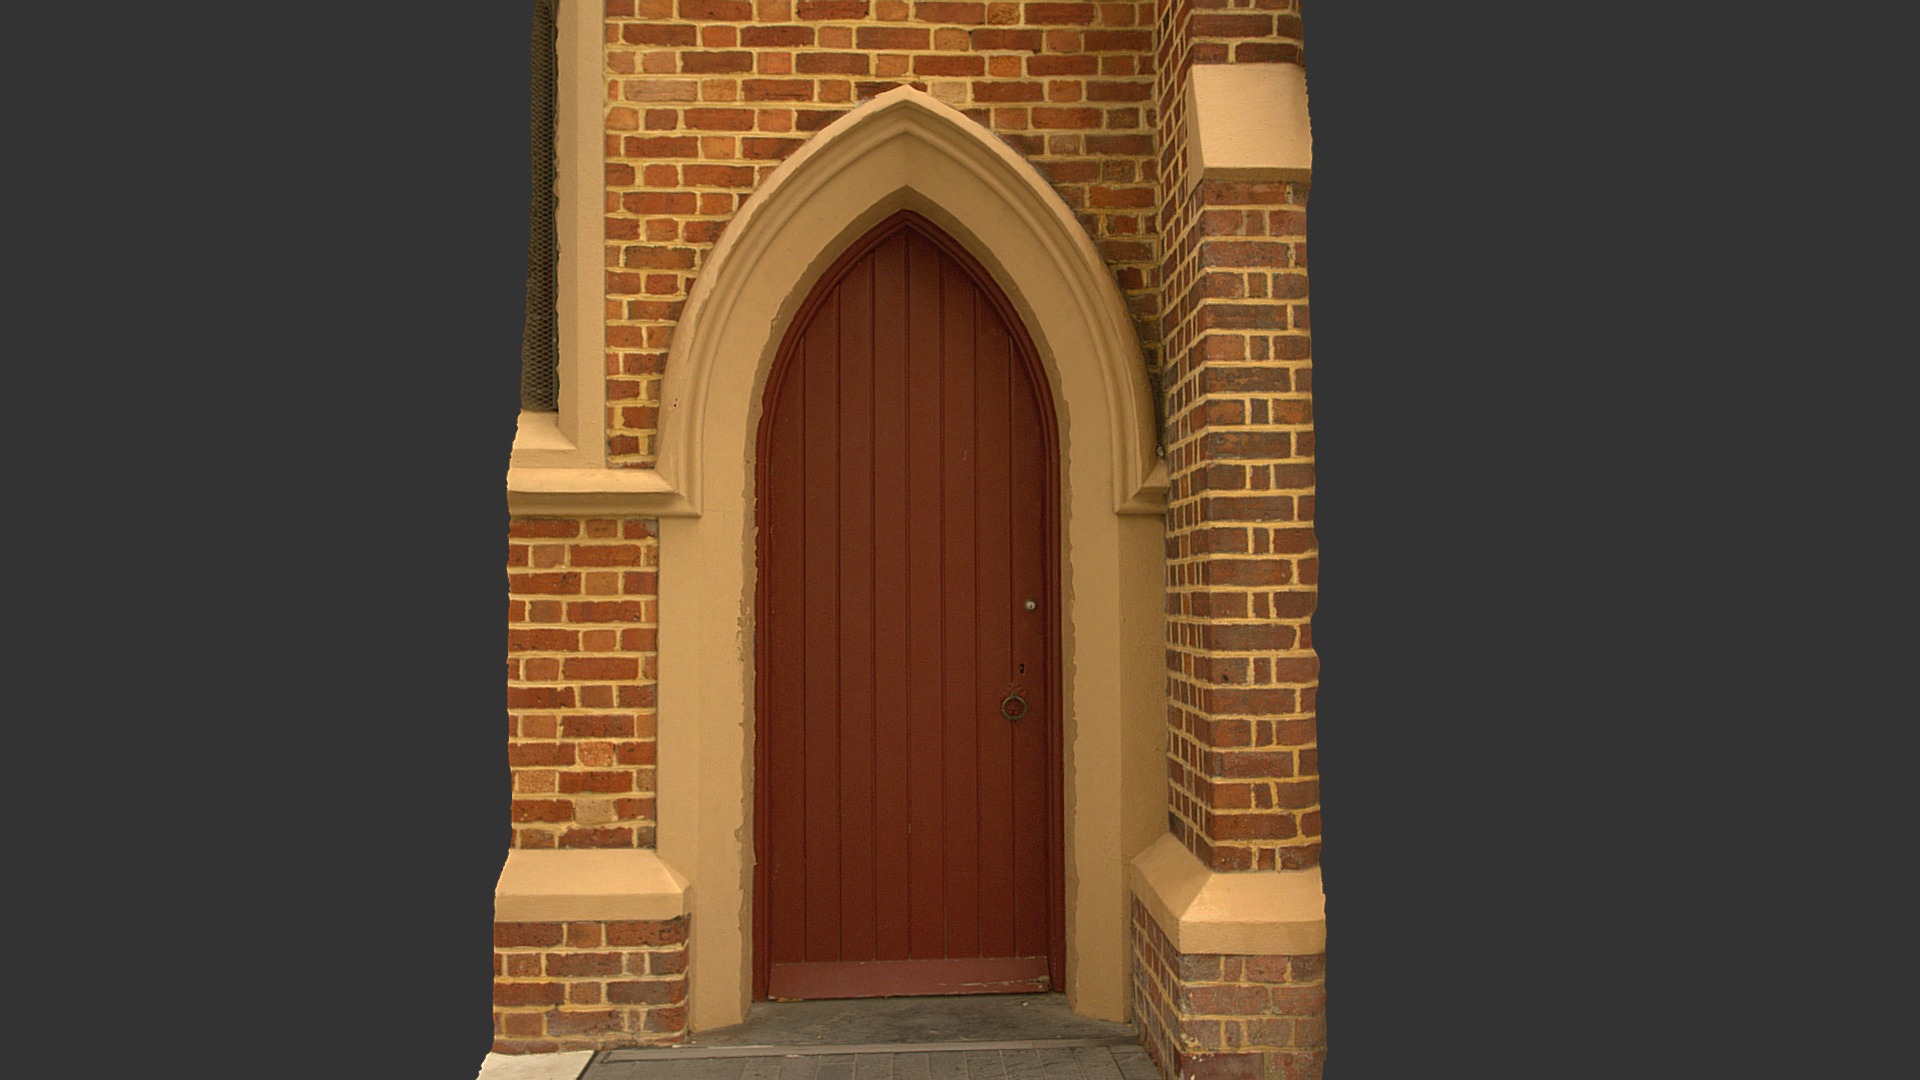 3D model Church Door - This is a 3D model of the Church Door. The 3D model is about a door in a brick building.